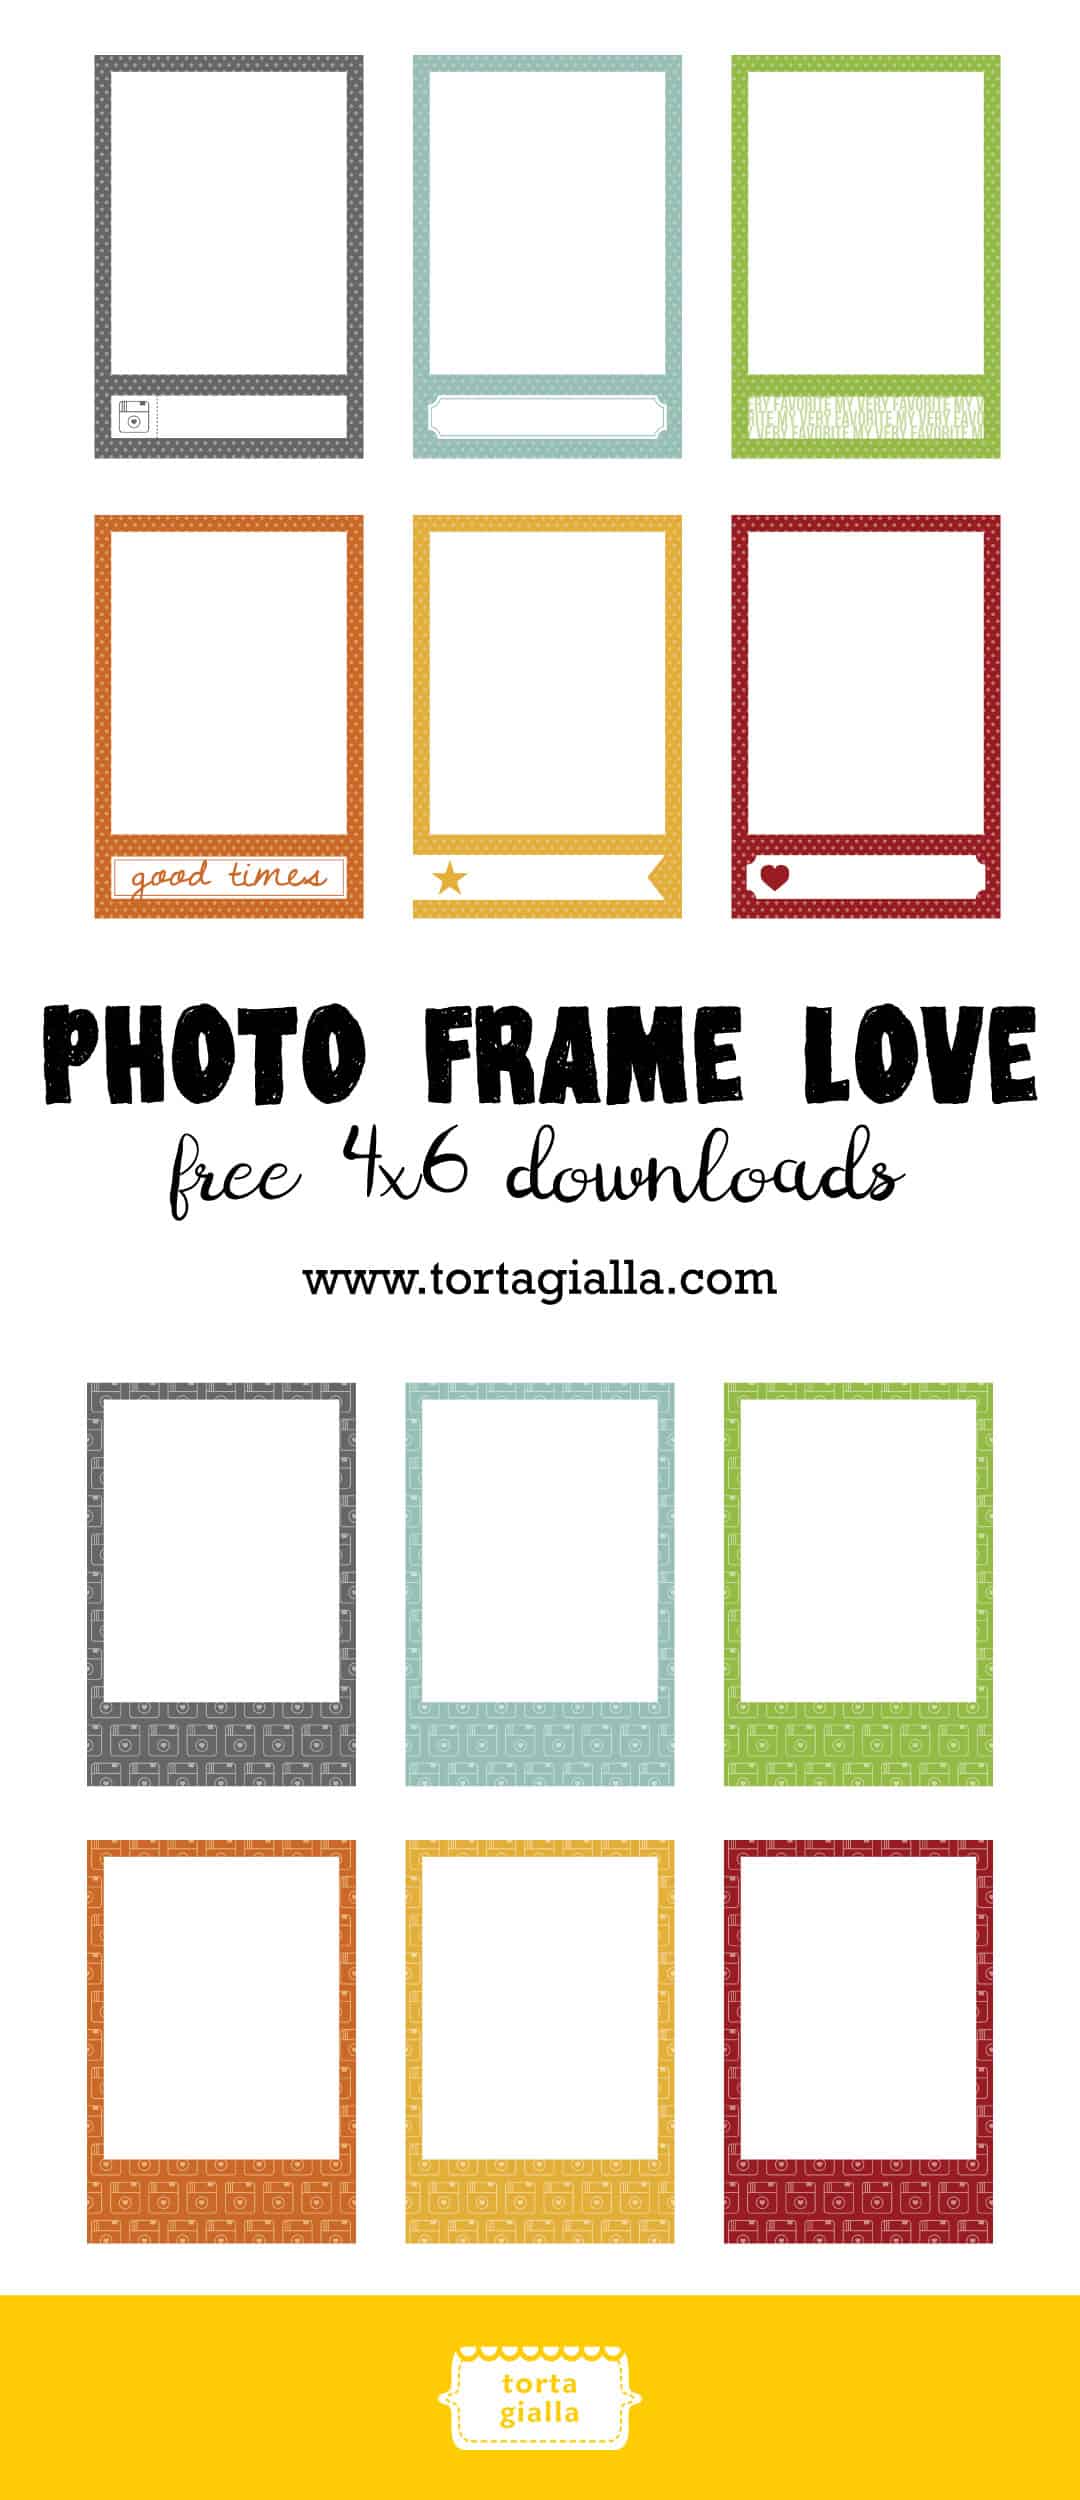 Free 4x6 Photo Frame Love Downloads Tortagialla